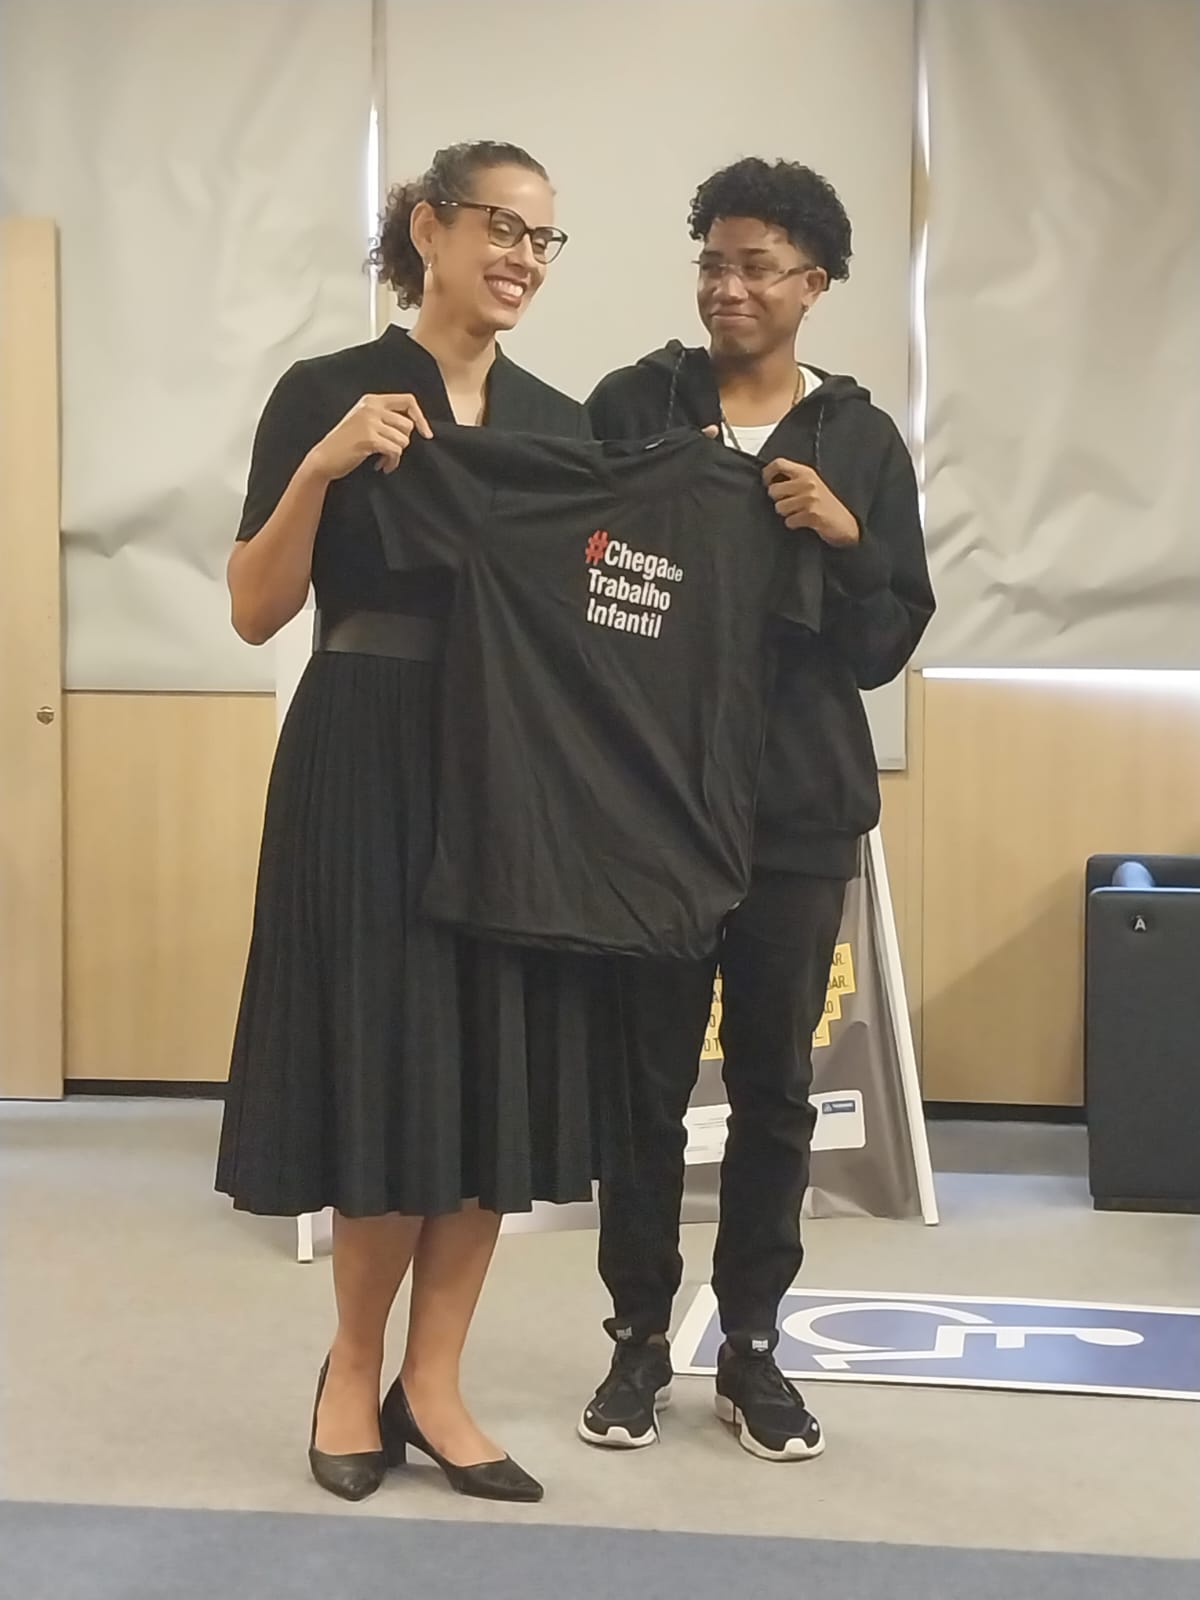 Juíza apresenta camisa preta onde está escrito "Chega de trabalho infantil"